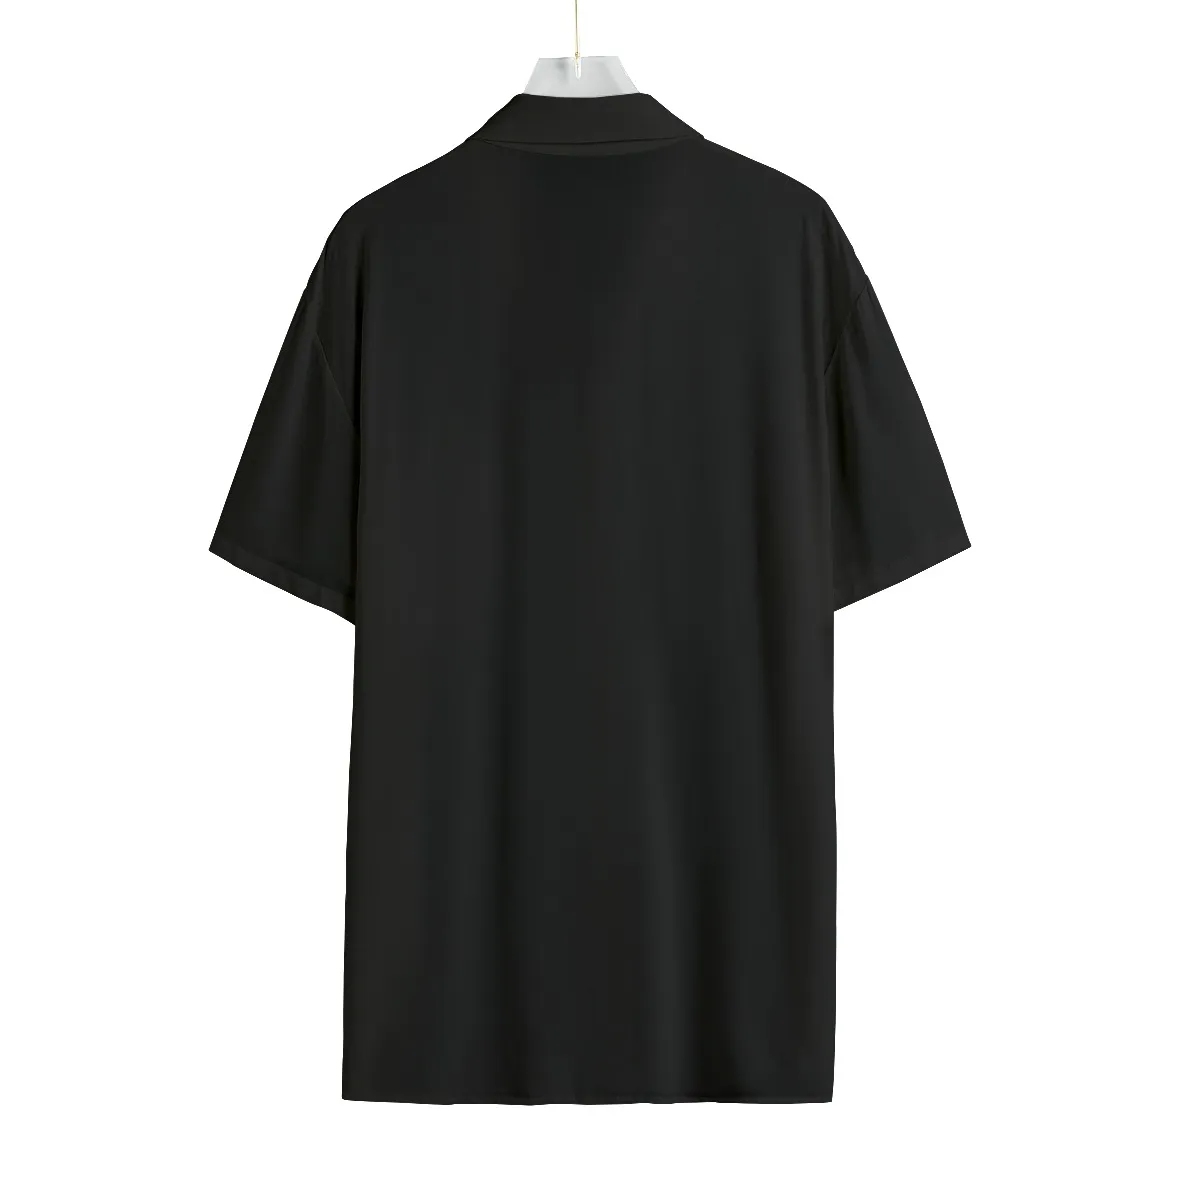 Men’s Black Rayon Shirt With Pocket 4